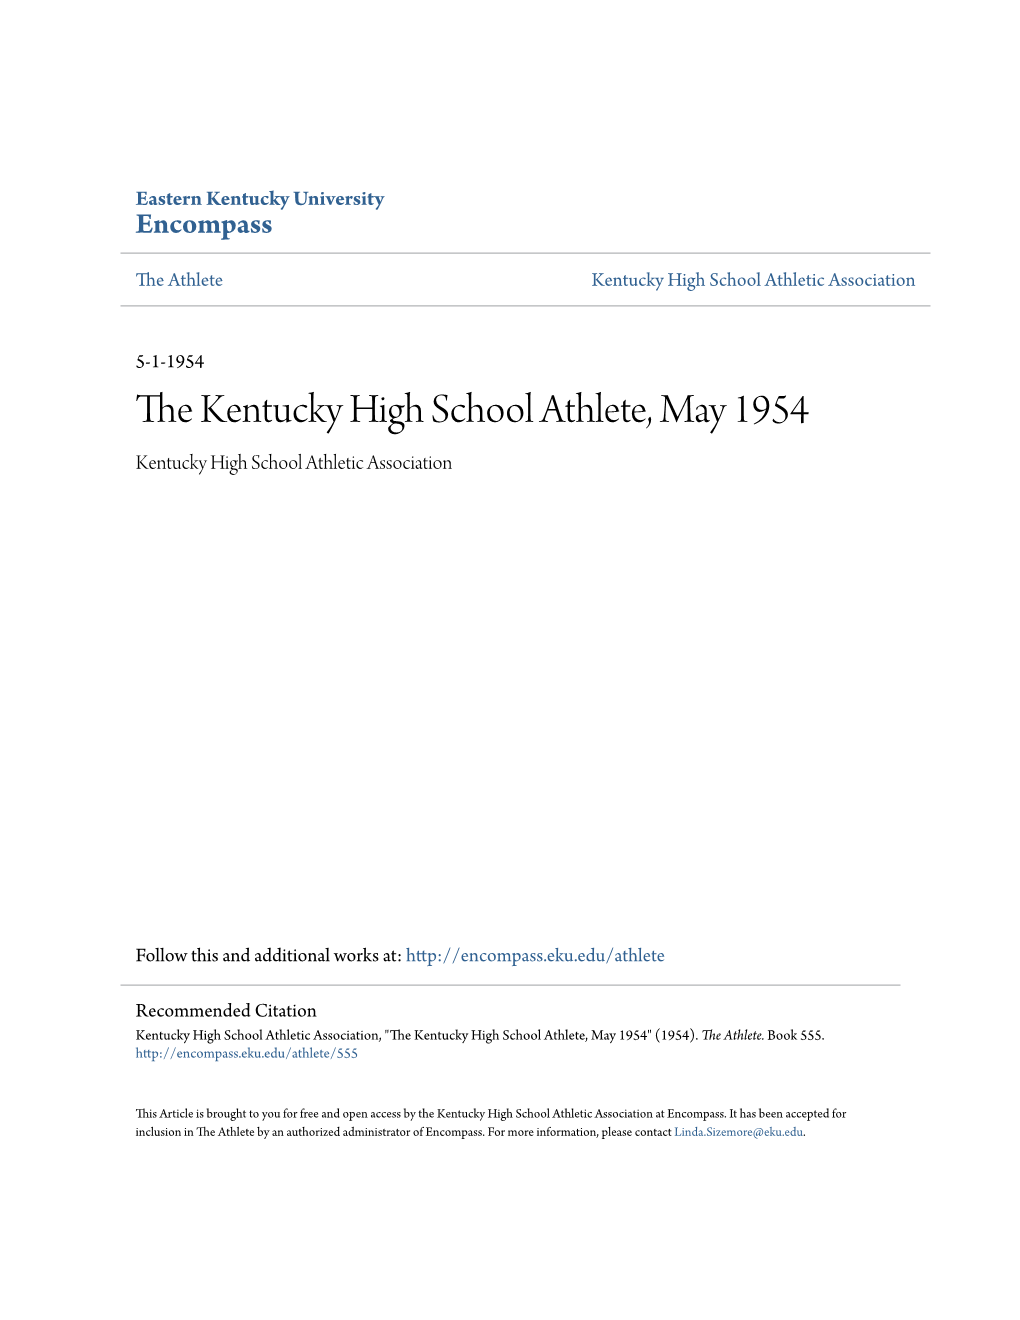 The Kentucky High School Athlete, May 1954 Kentucky High School Athletic Association